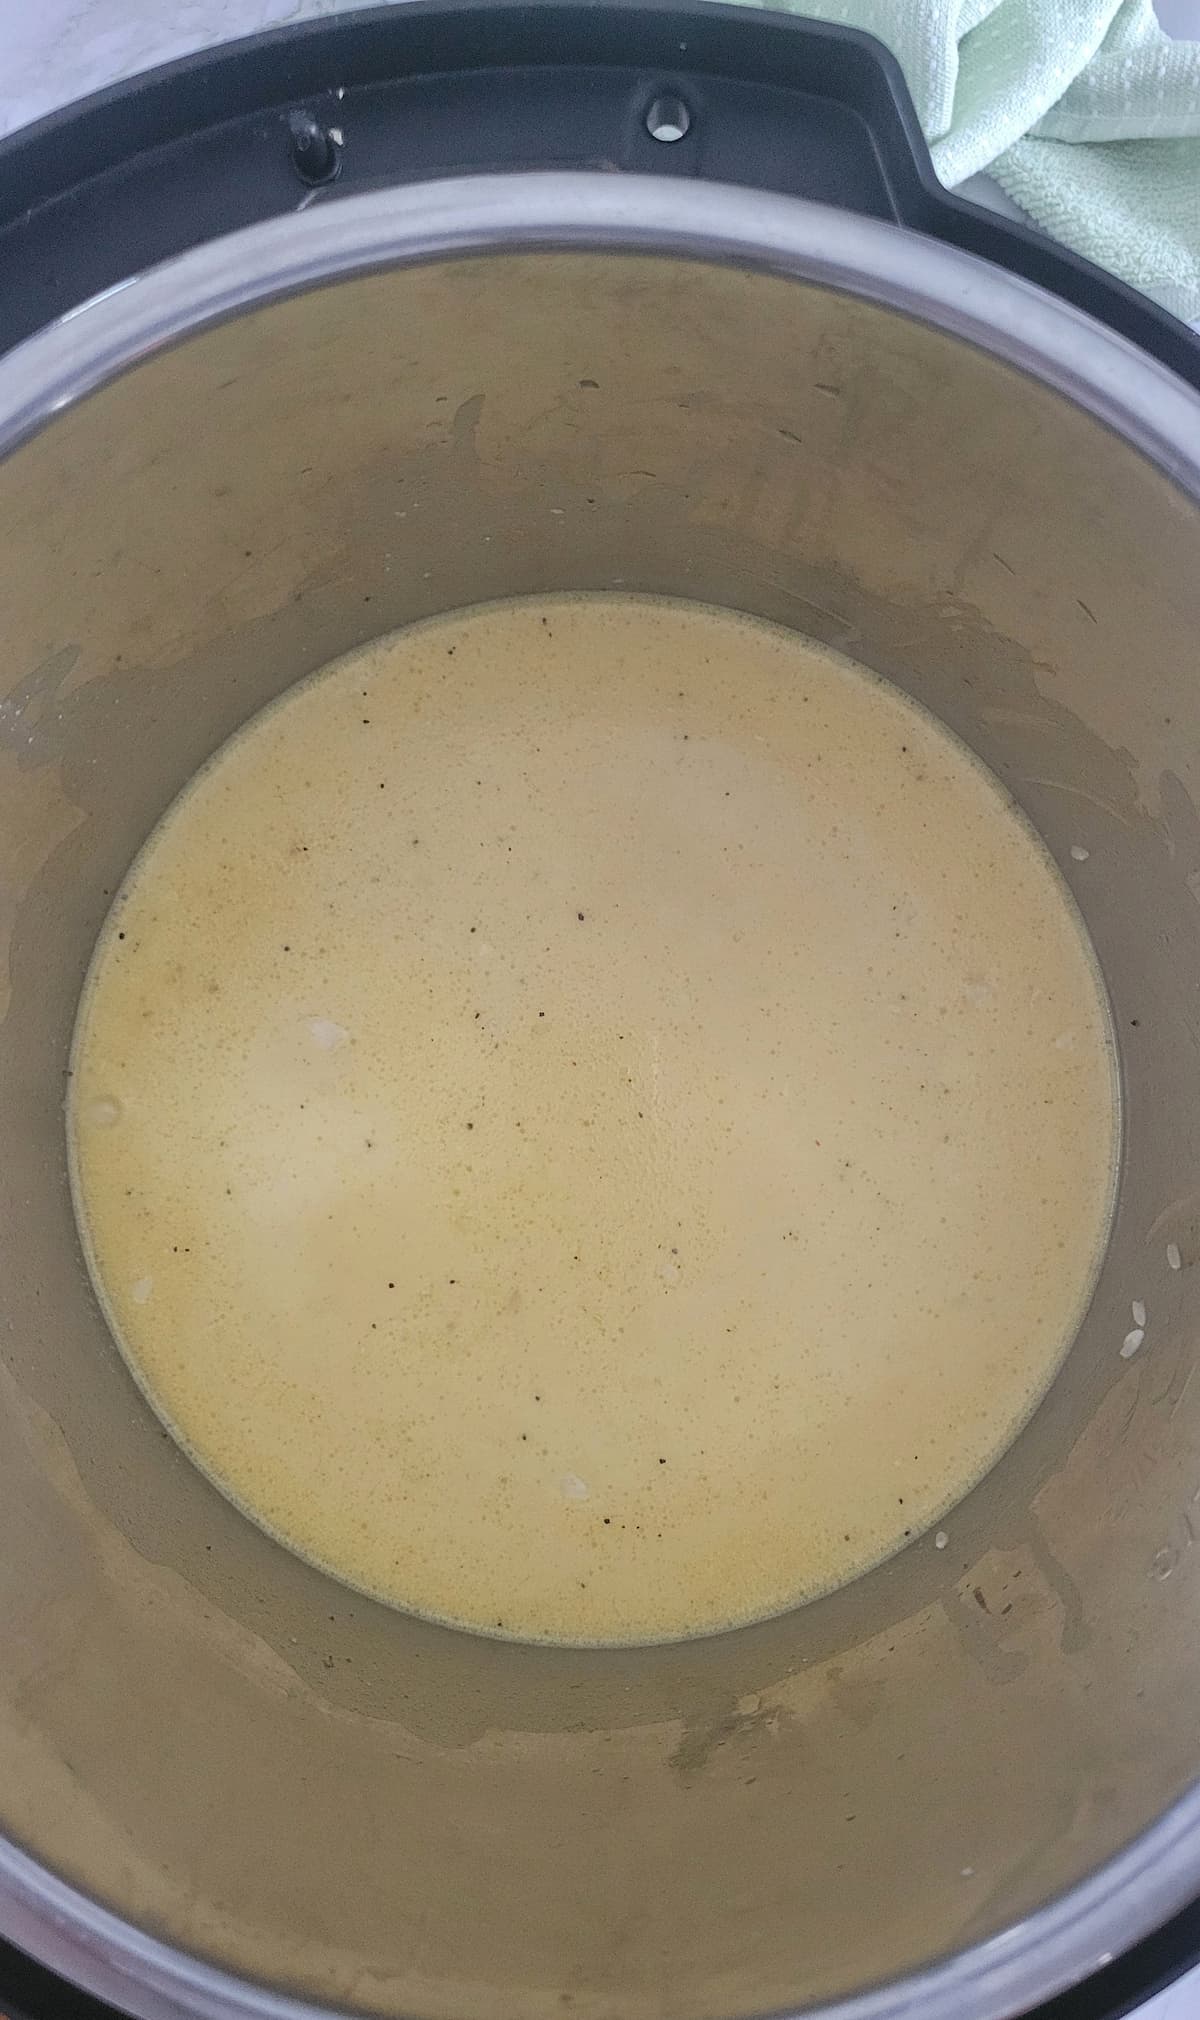 yellow creamy liquid in the instant pot